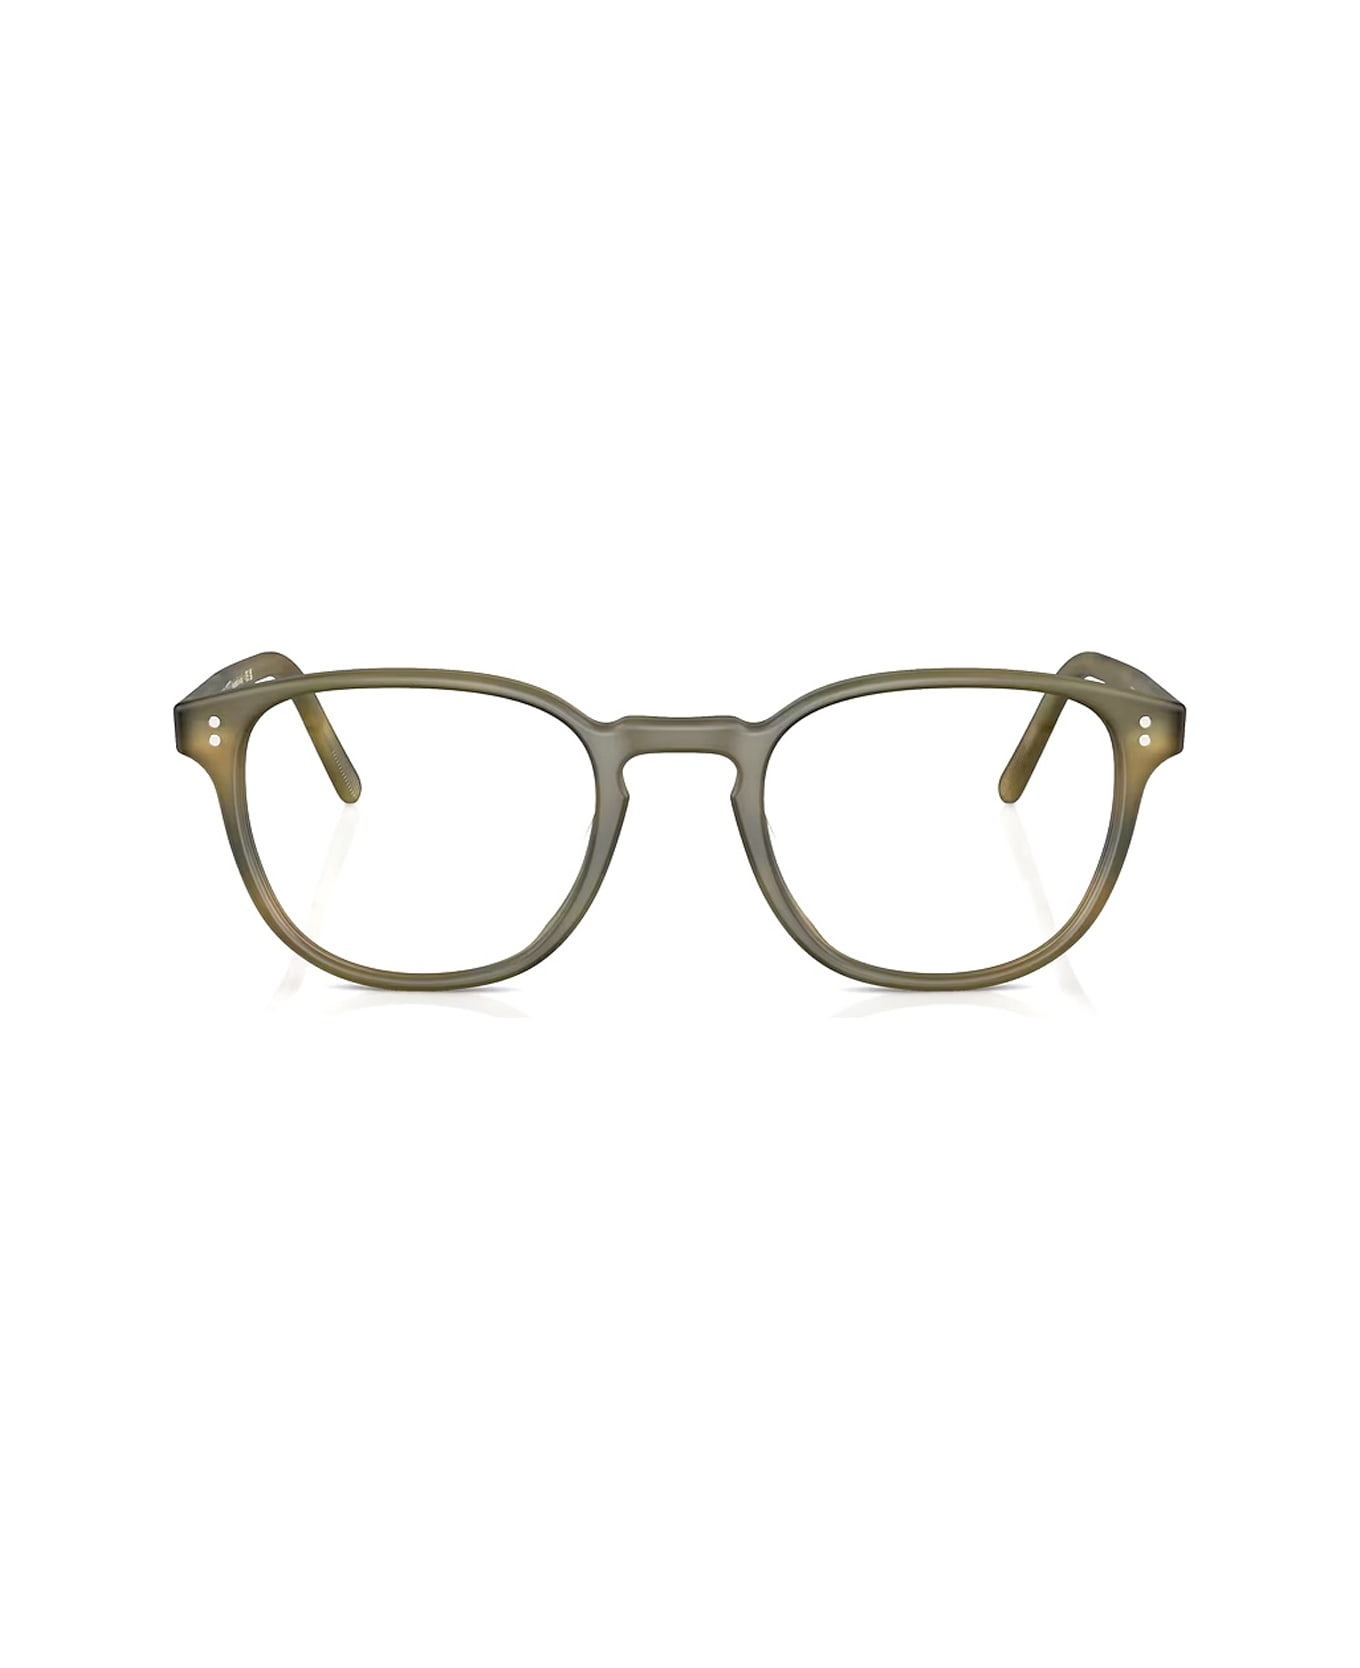 Oliver Peoples Ov5219 Fairmont Glasses - Marrone